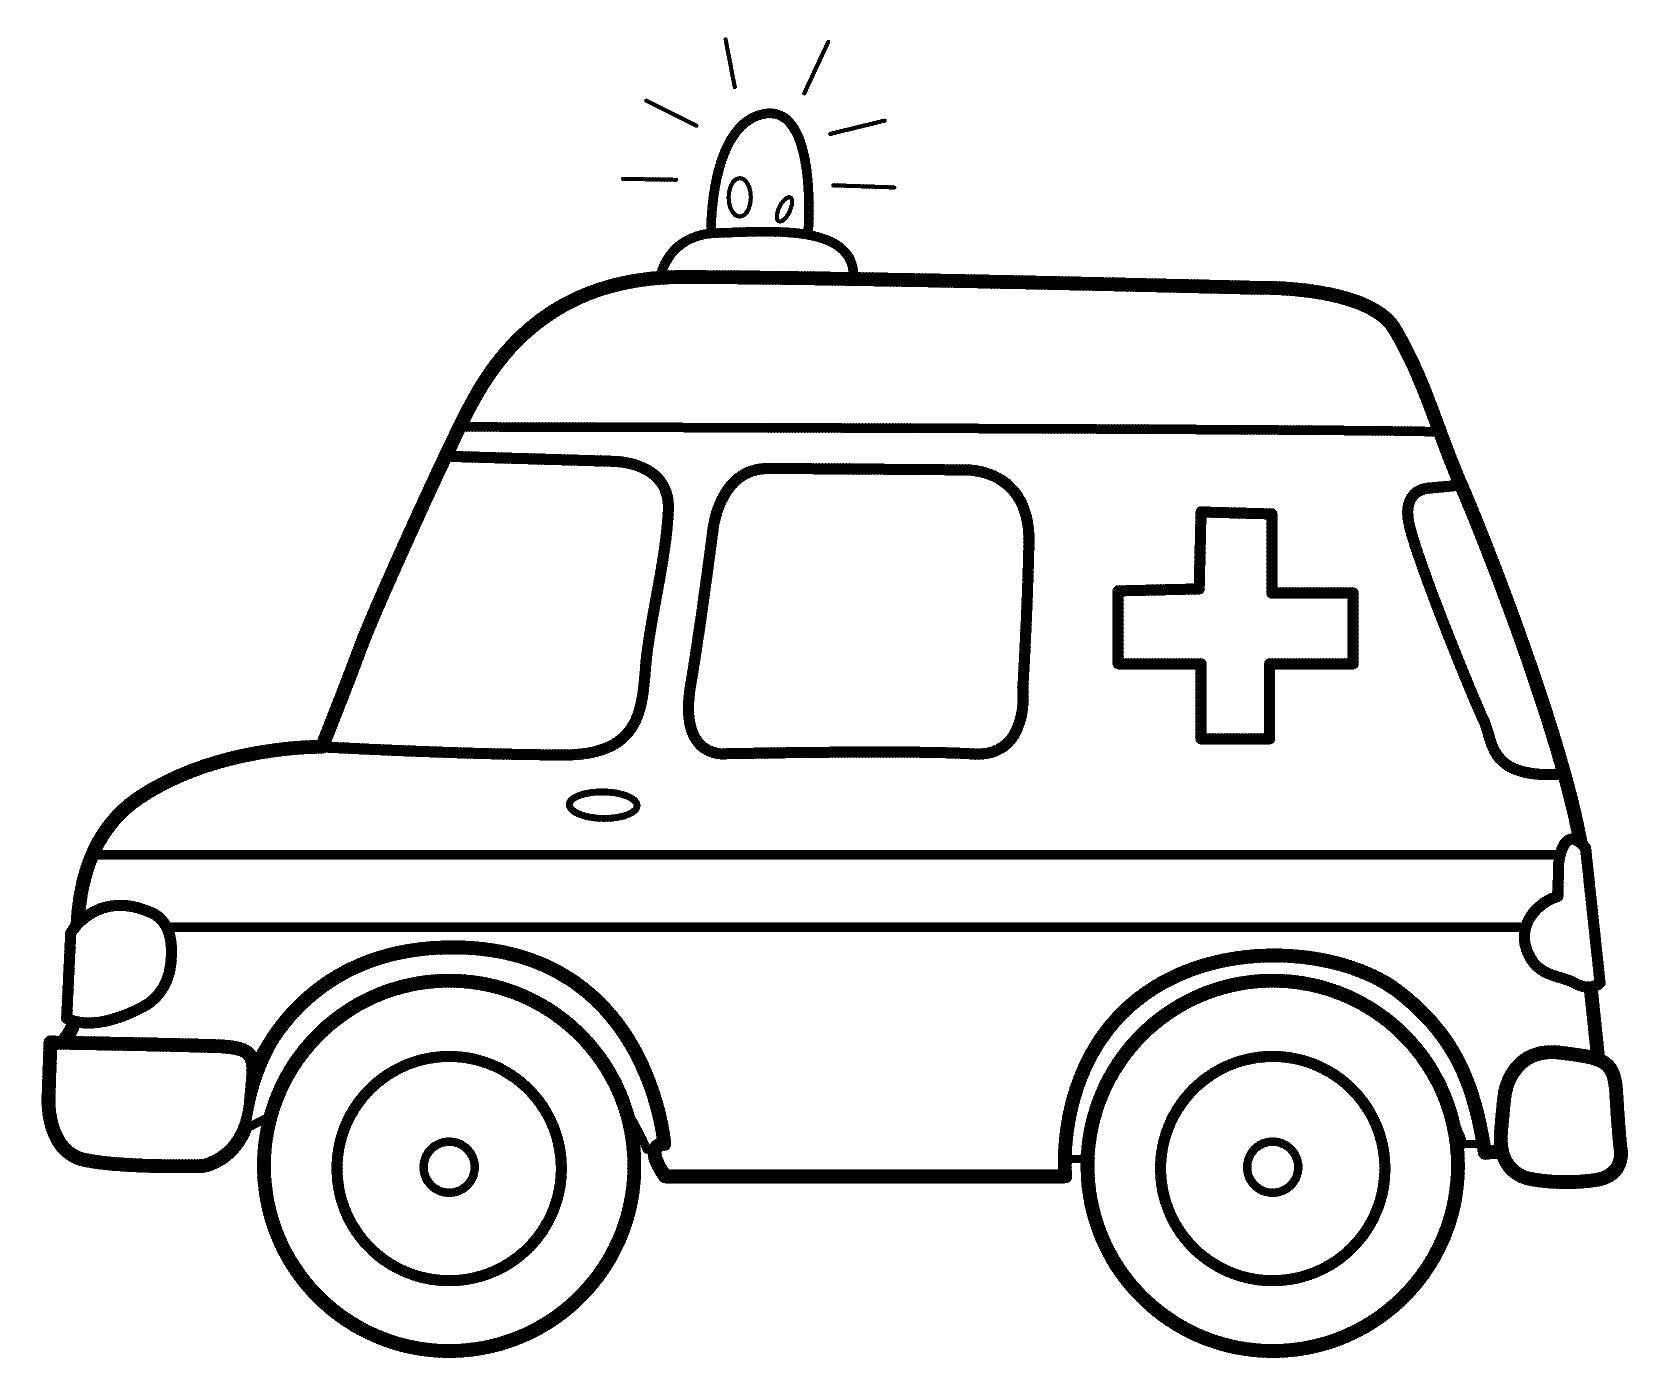 Coloring Ambulance. Category ambulance. Tags:  Transport, car.